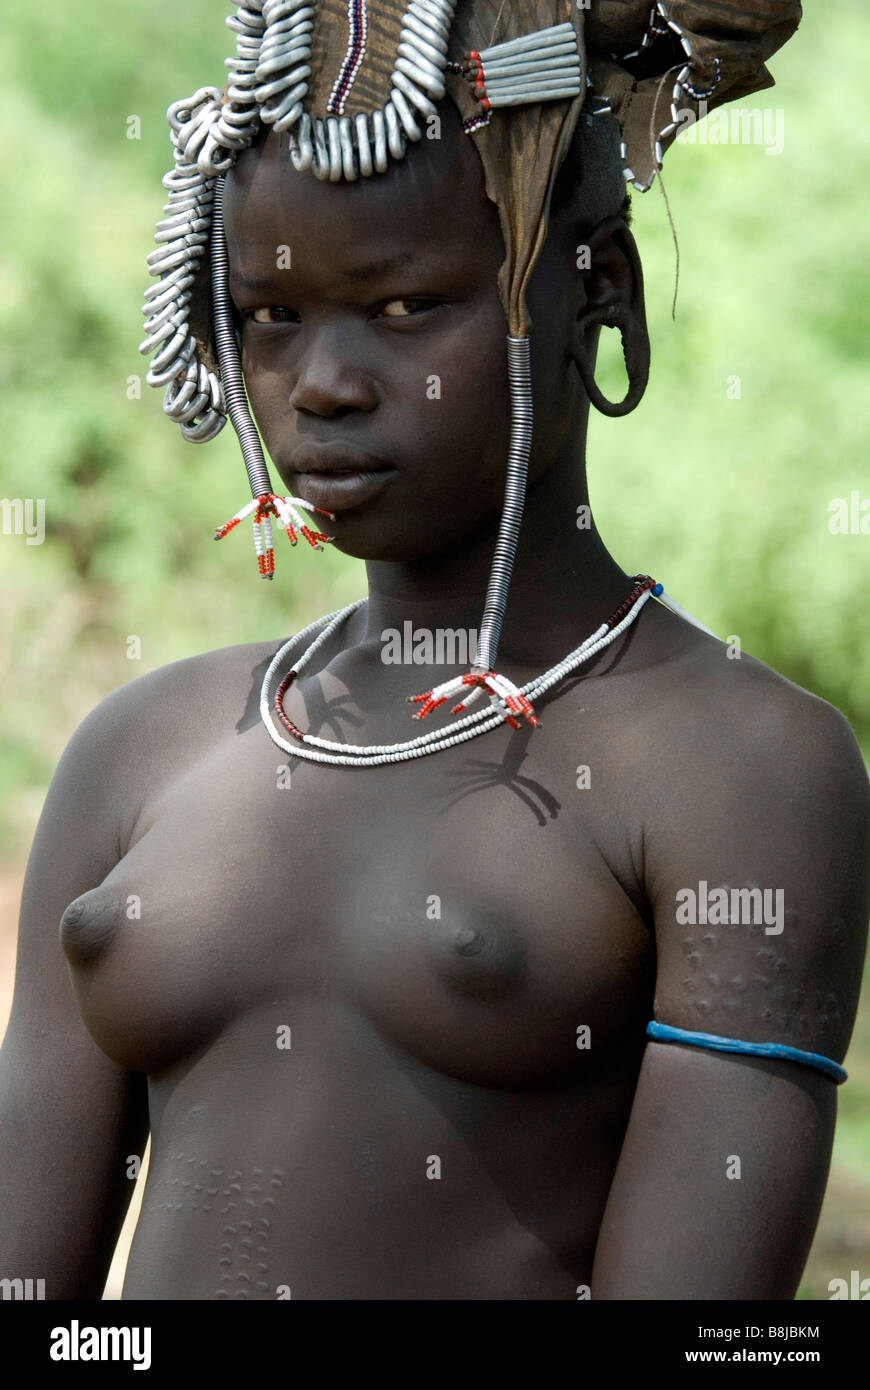 Joven tribu Mursi inferior del valle de Omo Etiopía Foto de stock